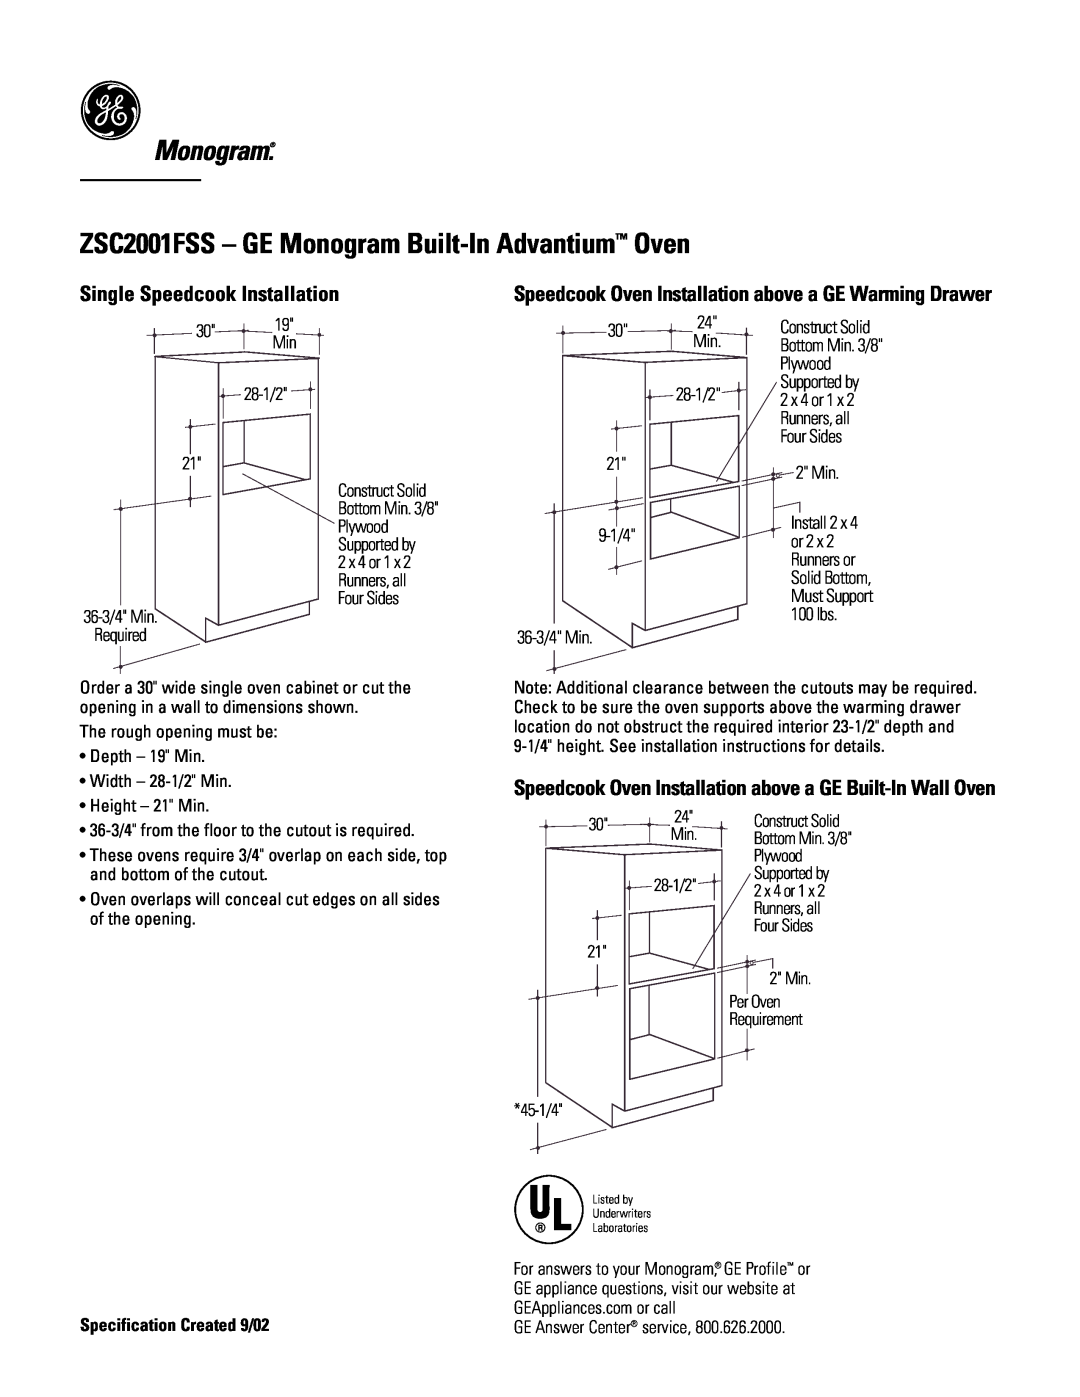 GE Monogram ZSC2001FSS - GE Monogram Built-In Advantium Oven, Single Speedcook Installation, 30 19 Min 28-1/2, 2 Min 